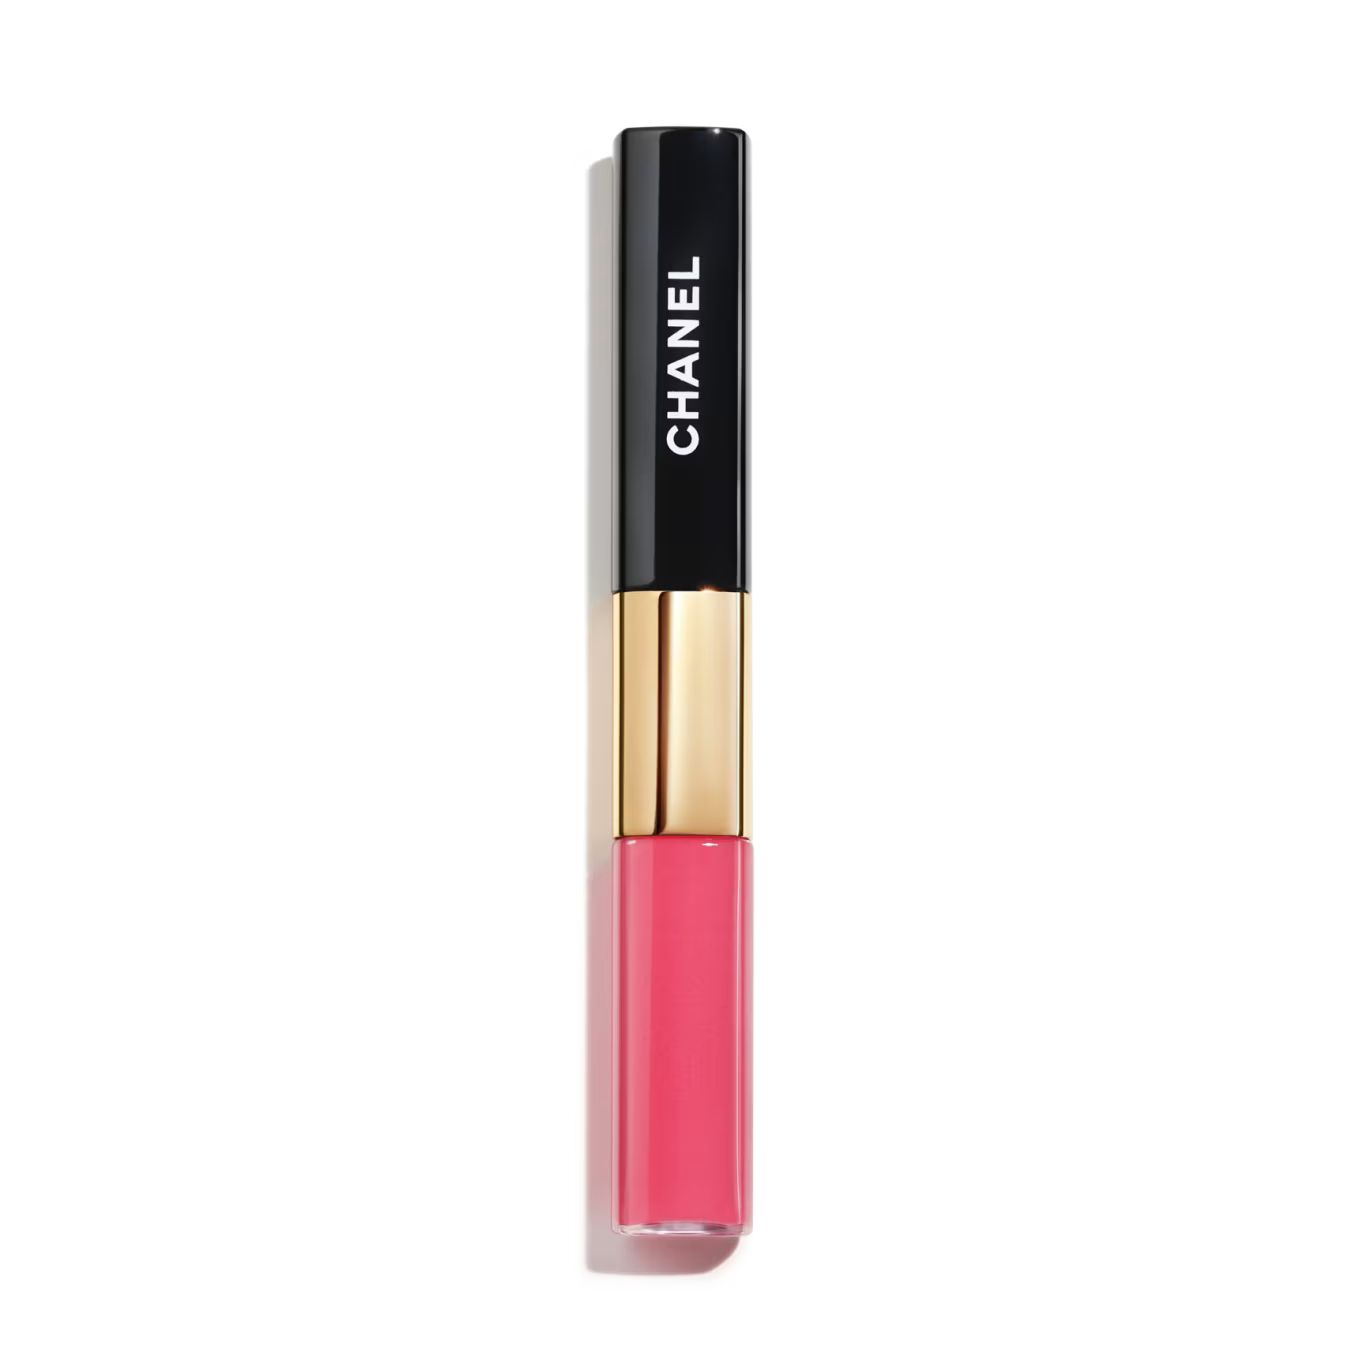 LE ROUGE DUO ULTRA TENUE Ultrawear liquid lip colour 126 - Radiant pink | CHANEL | Chanel, Inc. (US)